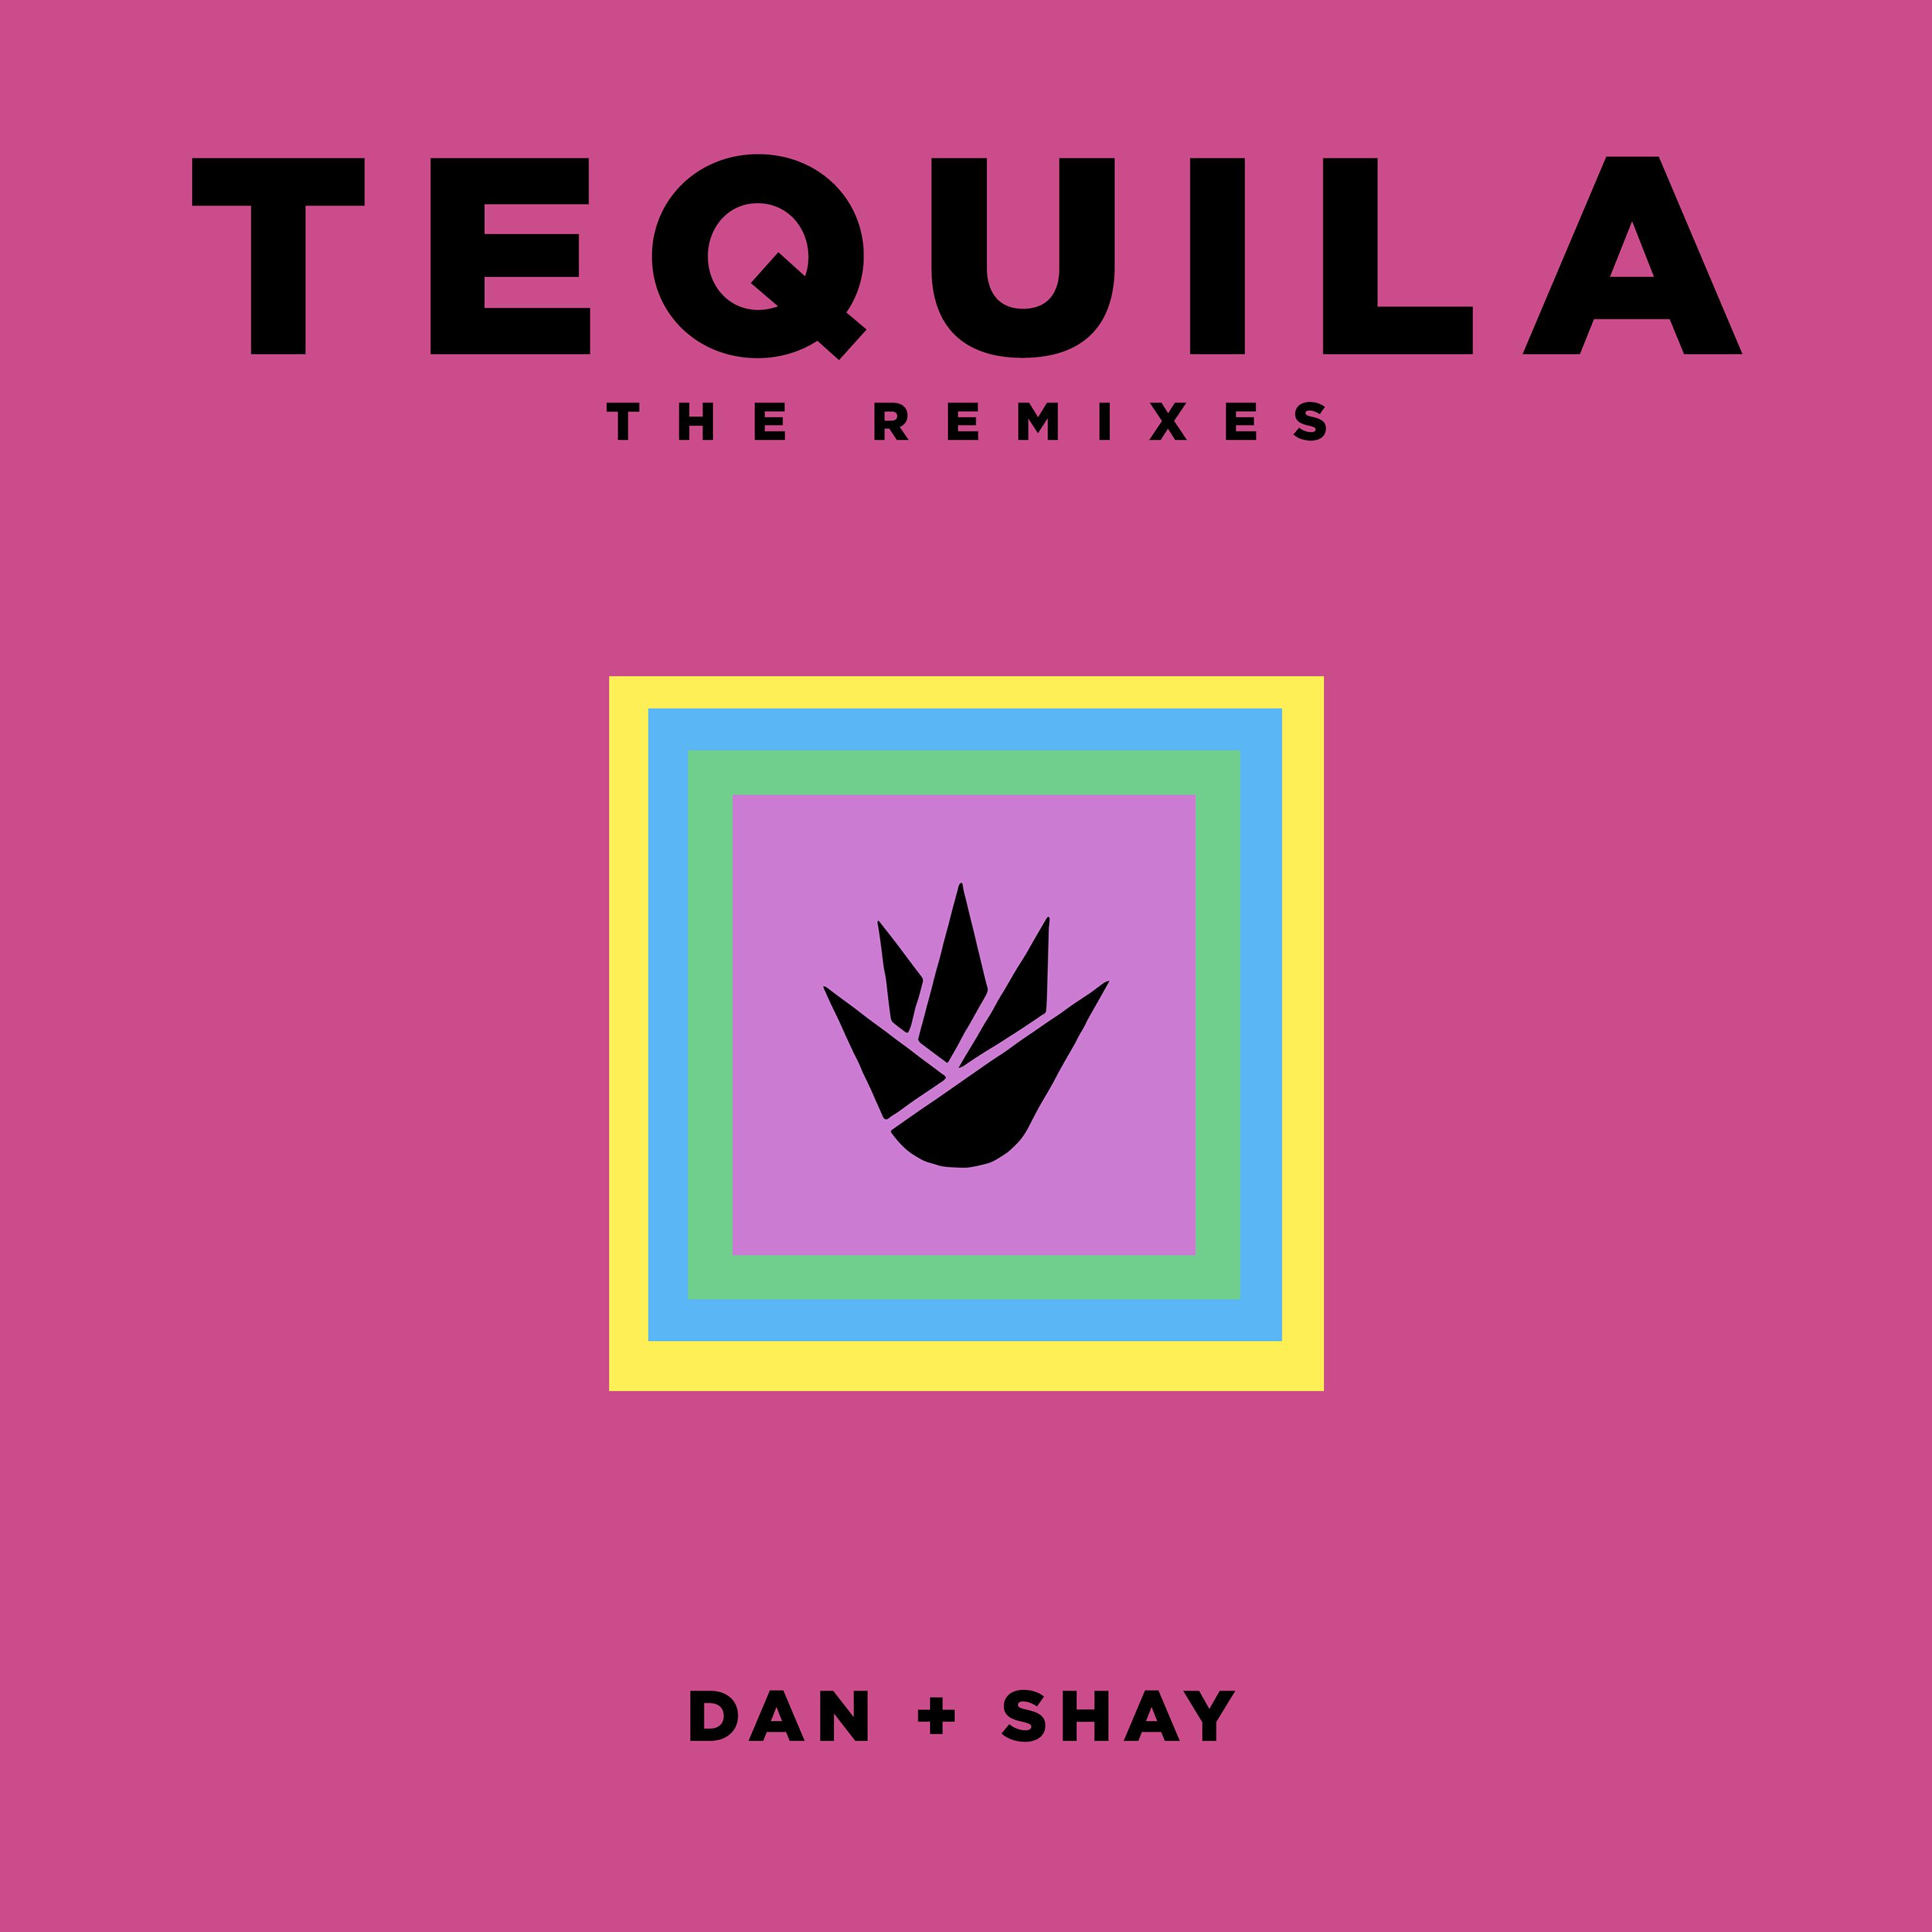 Tequila (R3HAB Remix)